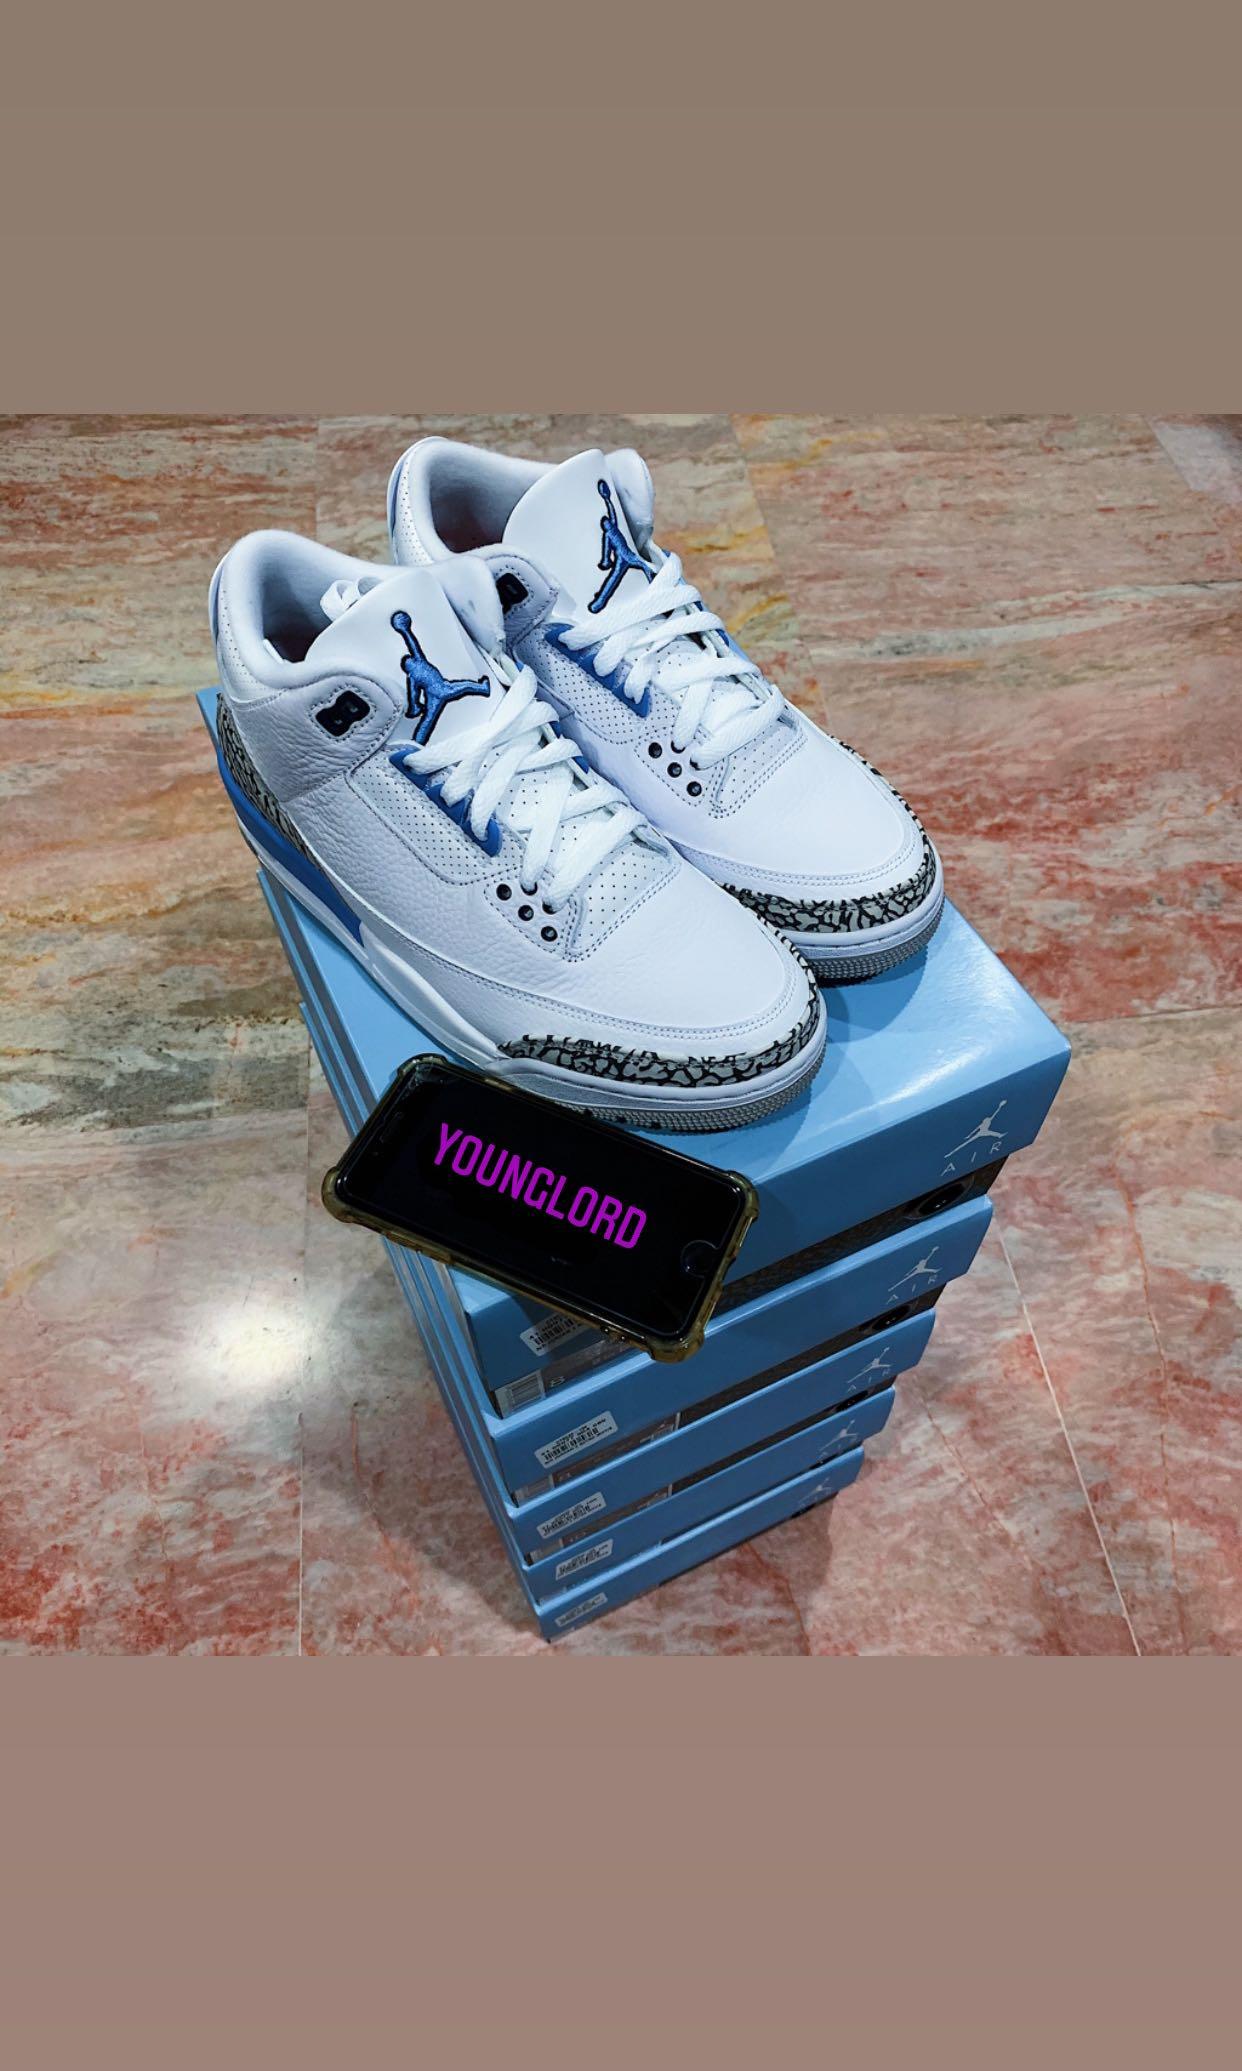 Nike Air Jordan 3 Retro Unc Men S Fashion Footwear Sneakers On Carousell